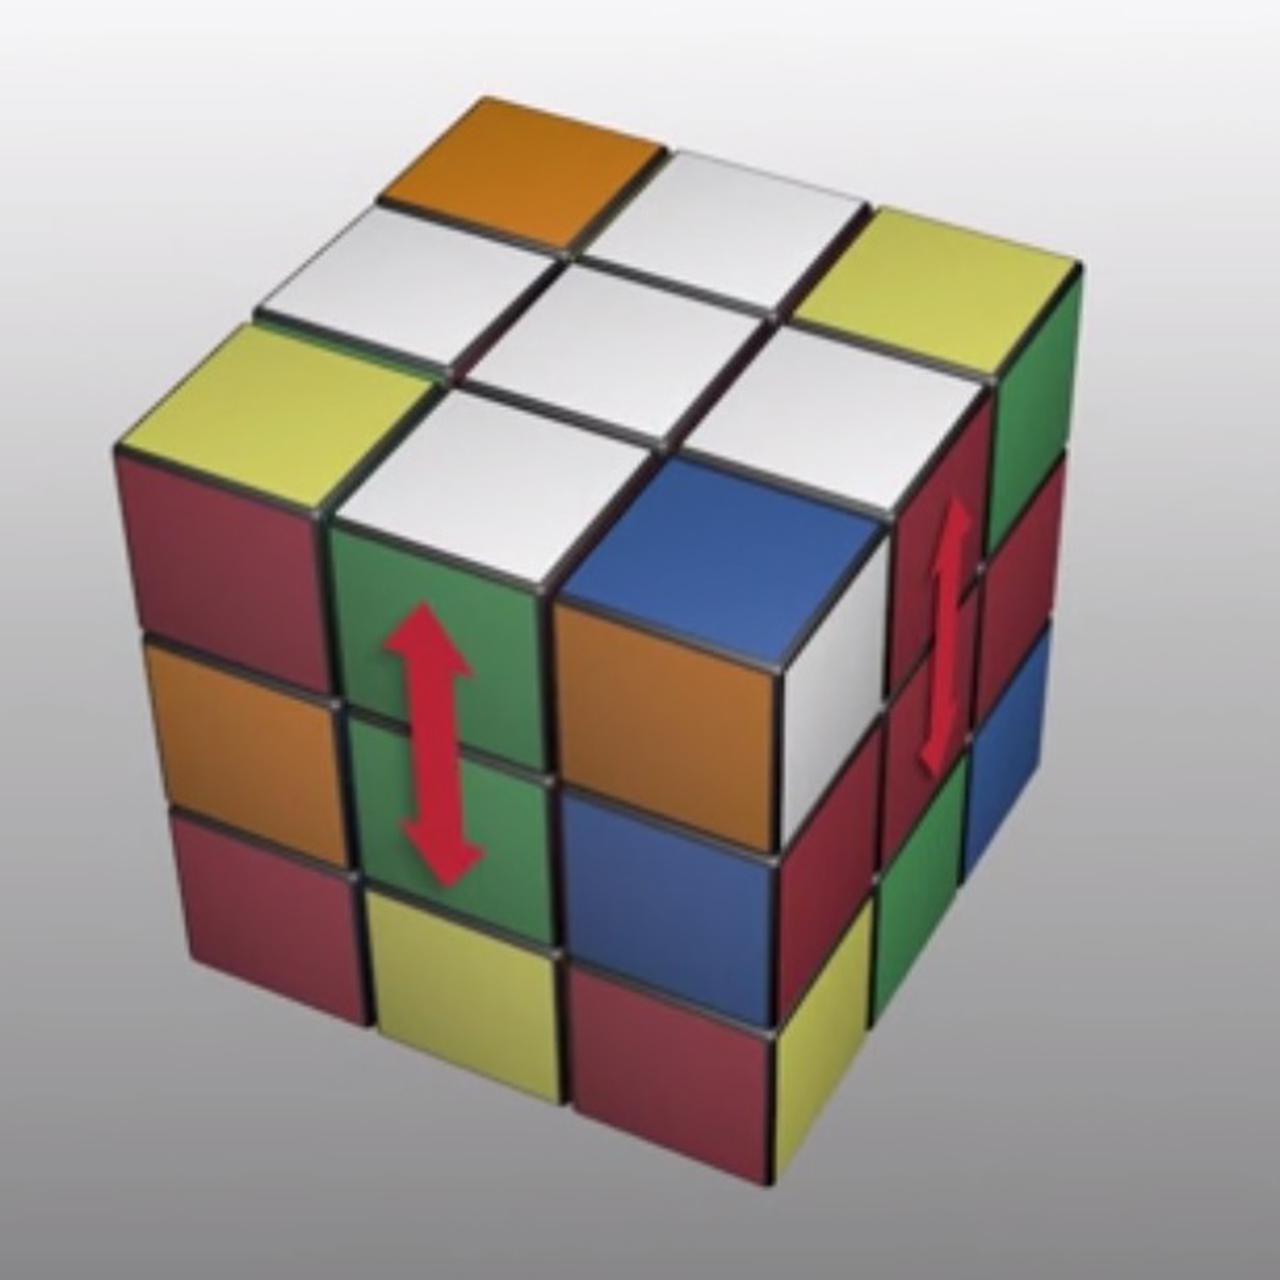 Техника по собиранию кубика рубика. Как собрать кубик рубика посло�йным методом